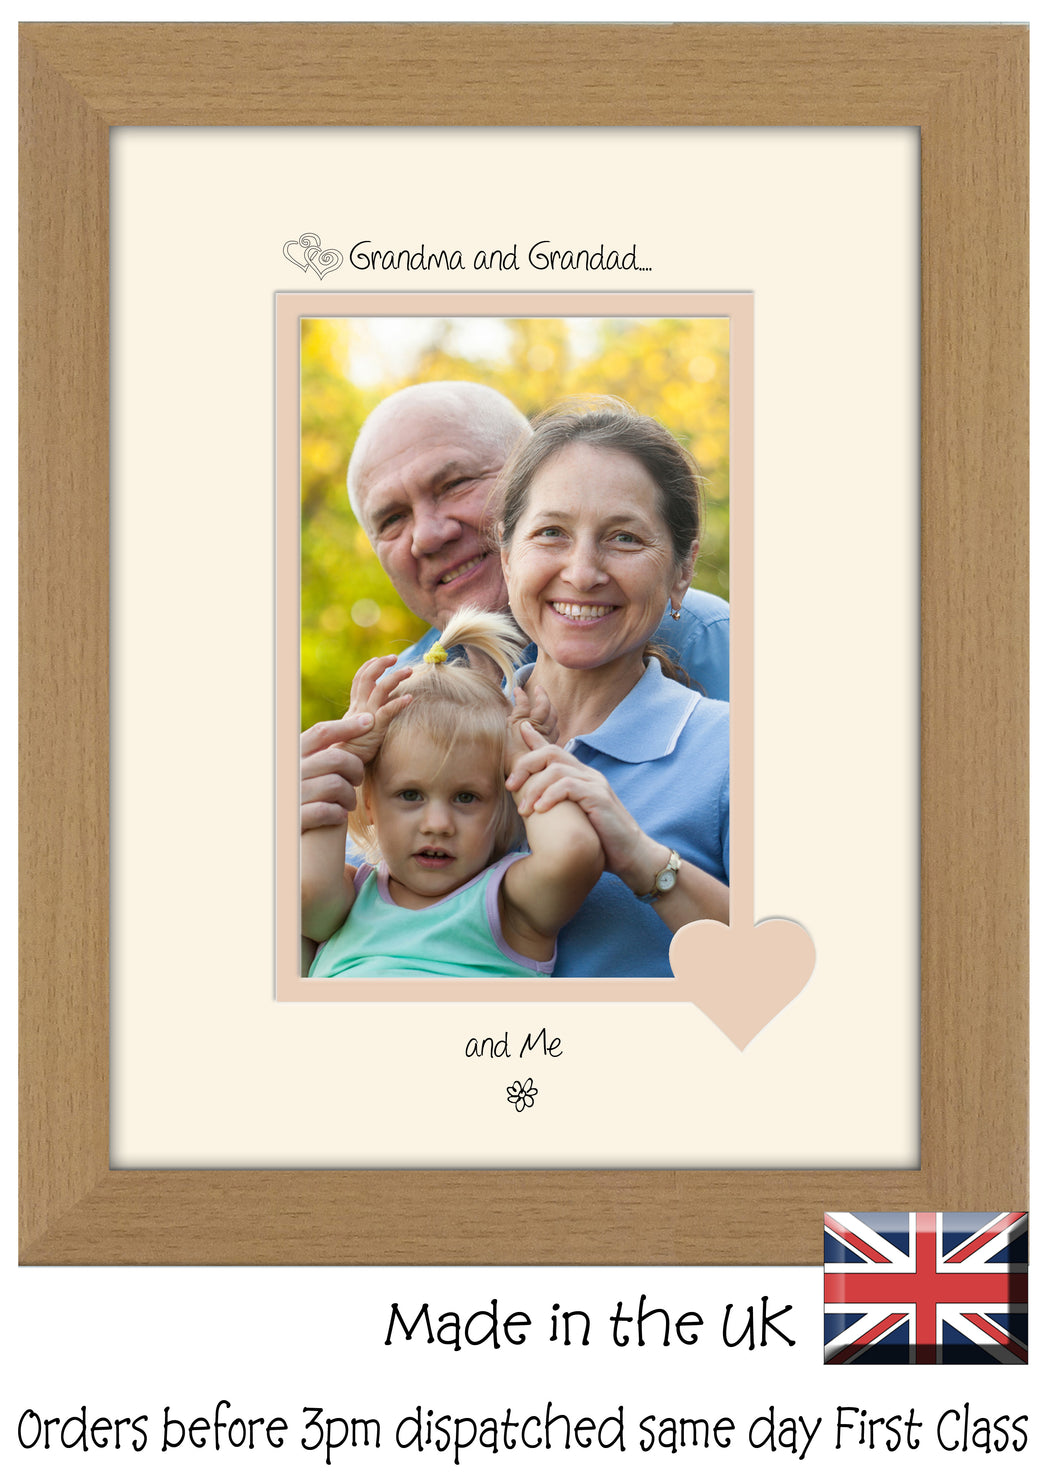 Grandma & Grandad Photo Frame - Grandma and Grandad… ...and me! Portrait photo frame 6